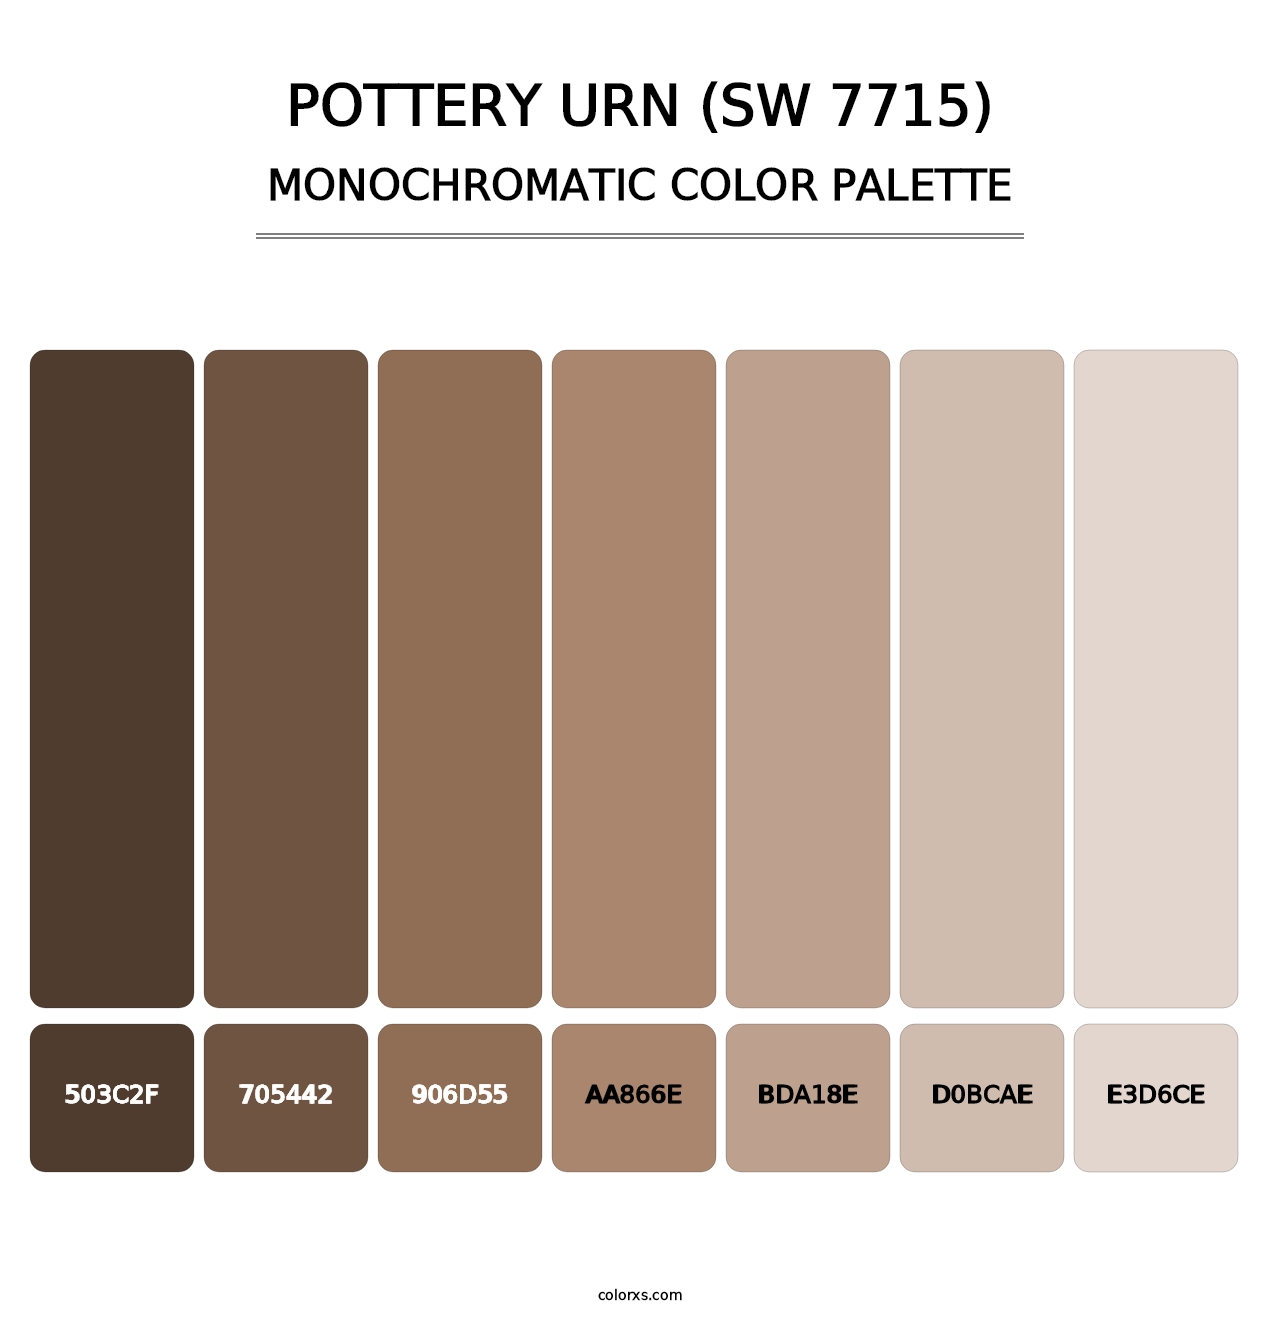 Pottery Urn (SW 7715) - Monochromatic Color Palette